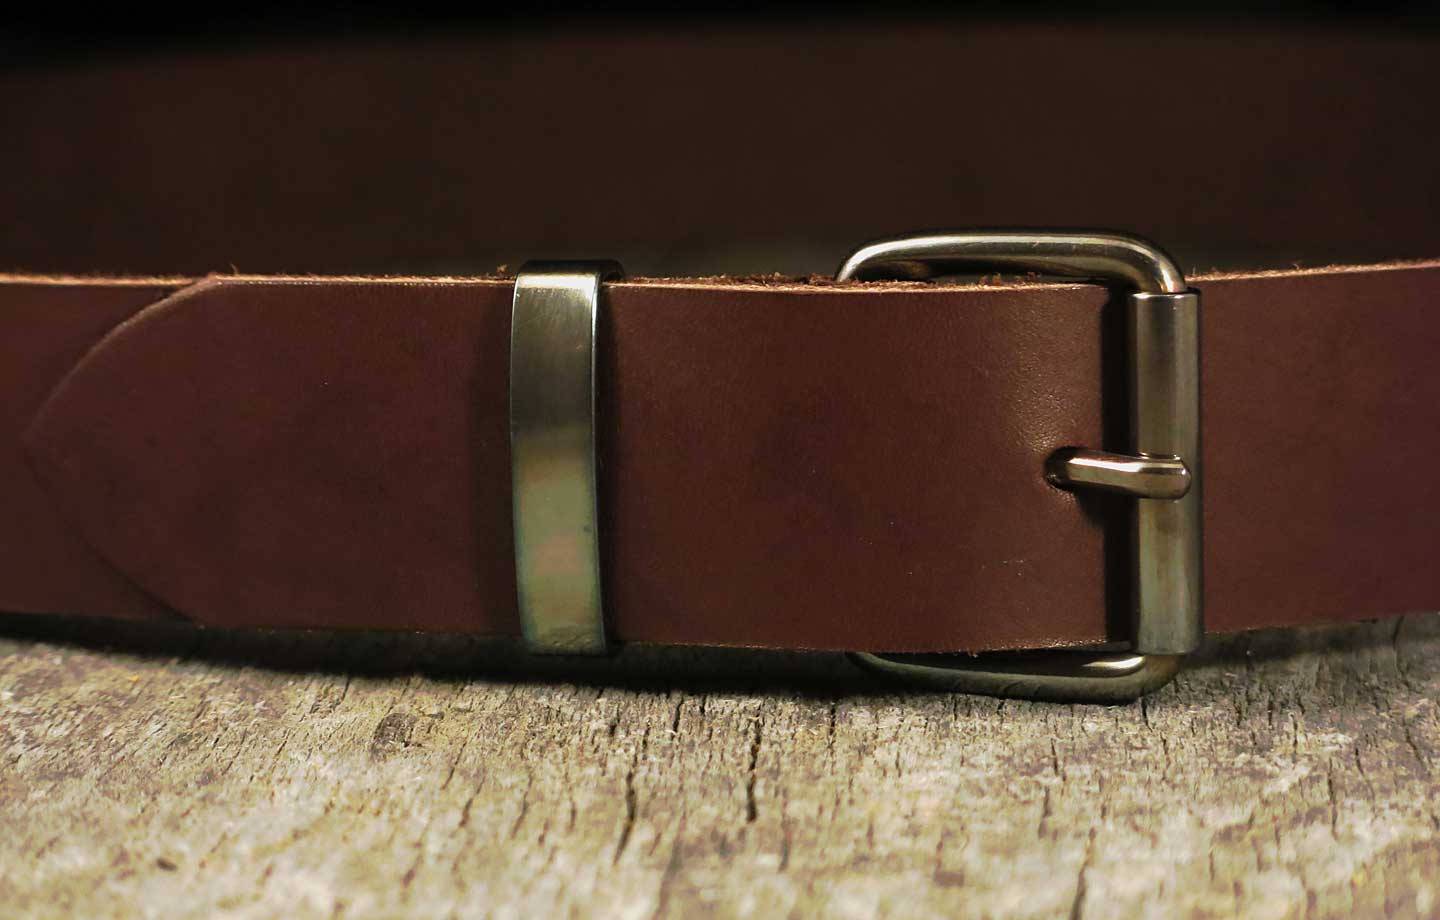 Capo Pelle Men's Leather Belt with Metal Loops